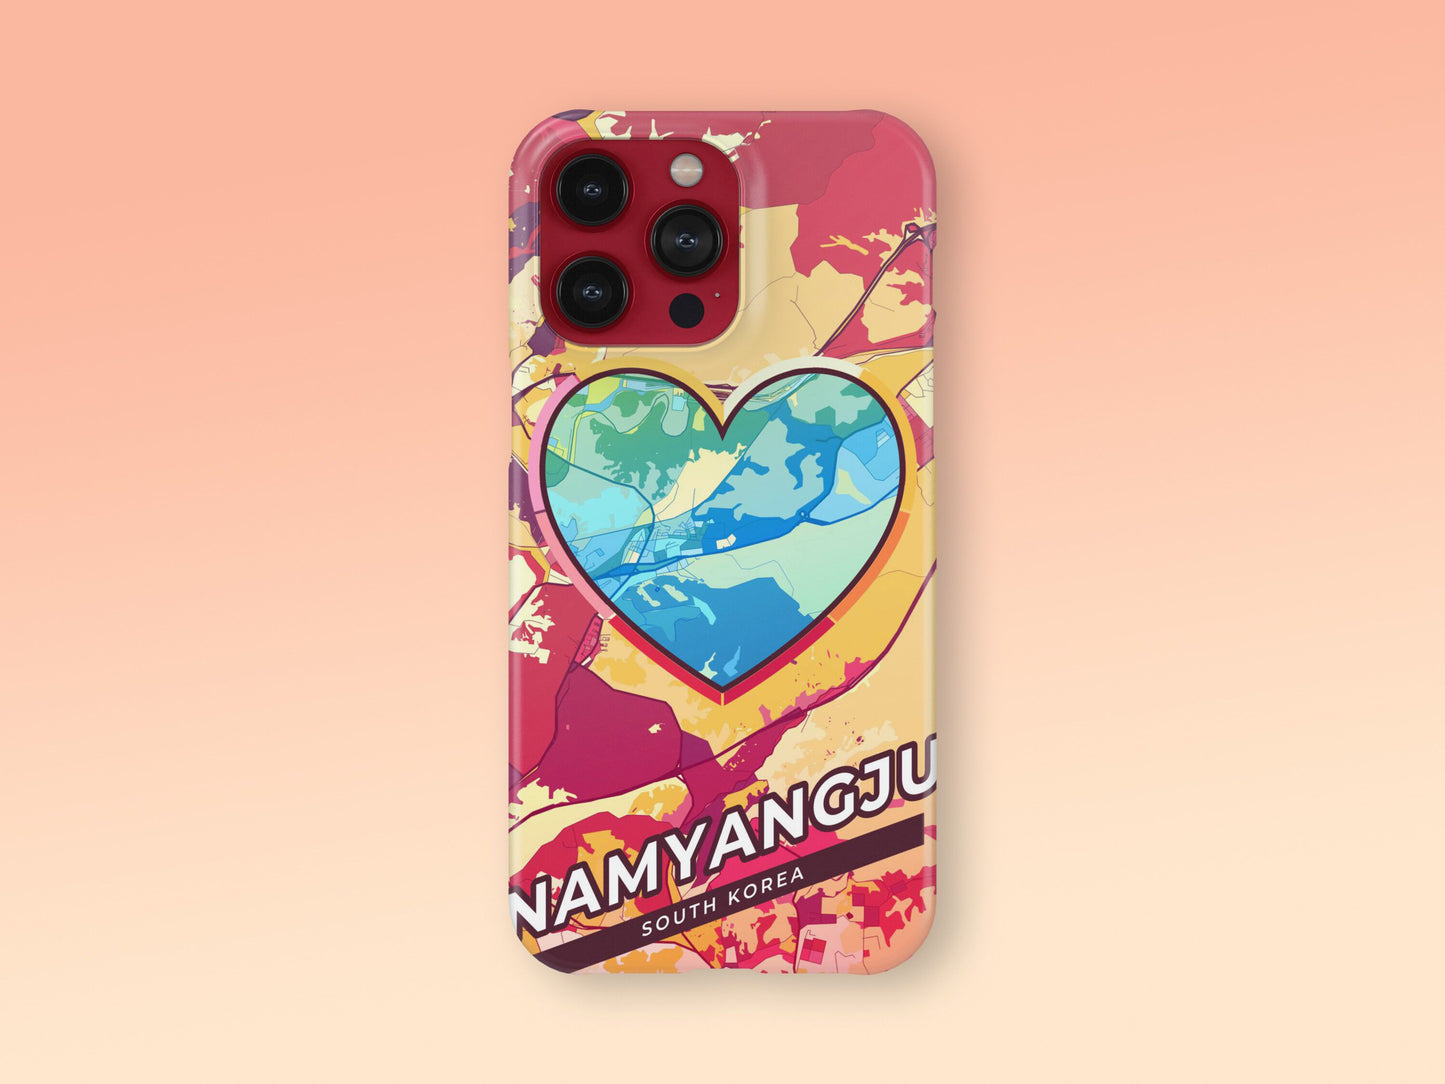 Namyangju South Korea slim phone case with colorful icon 2